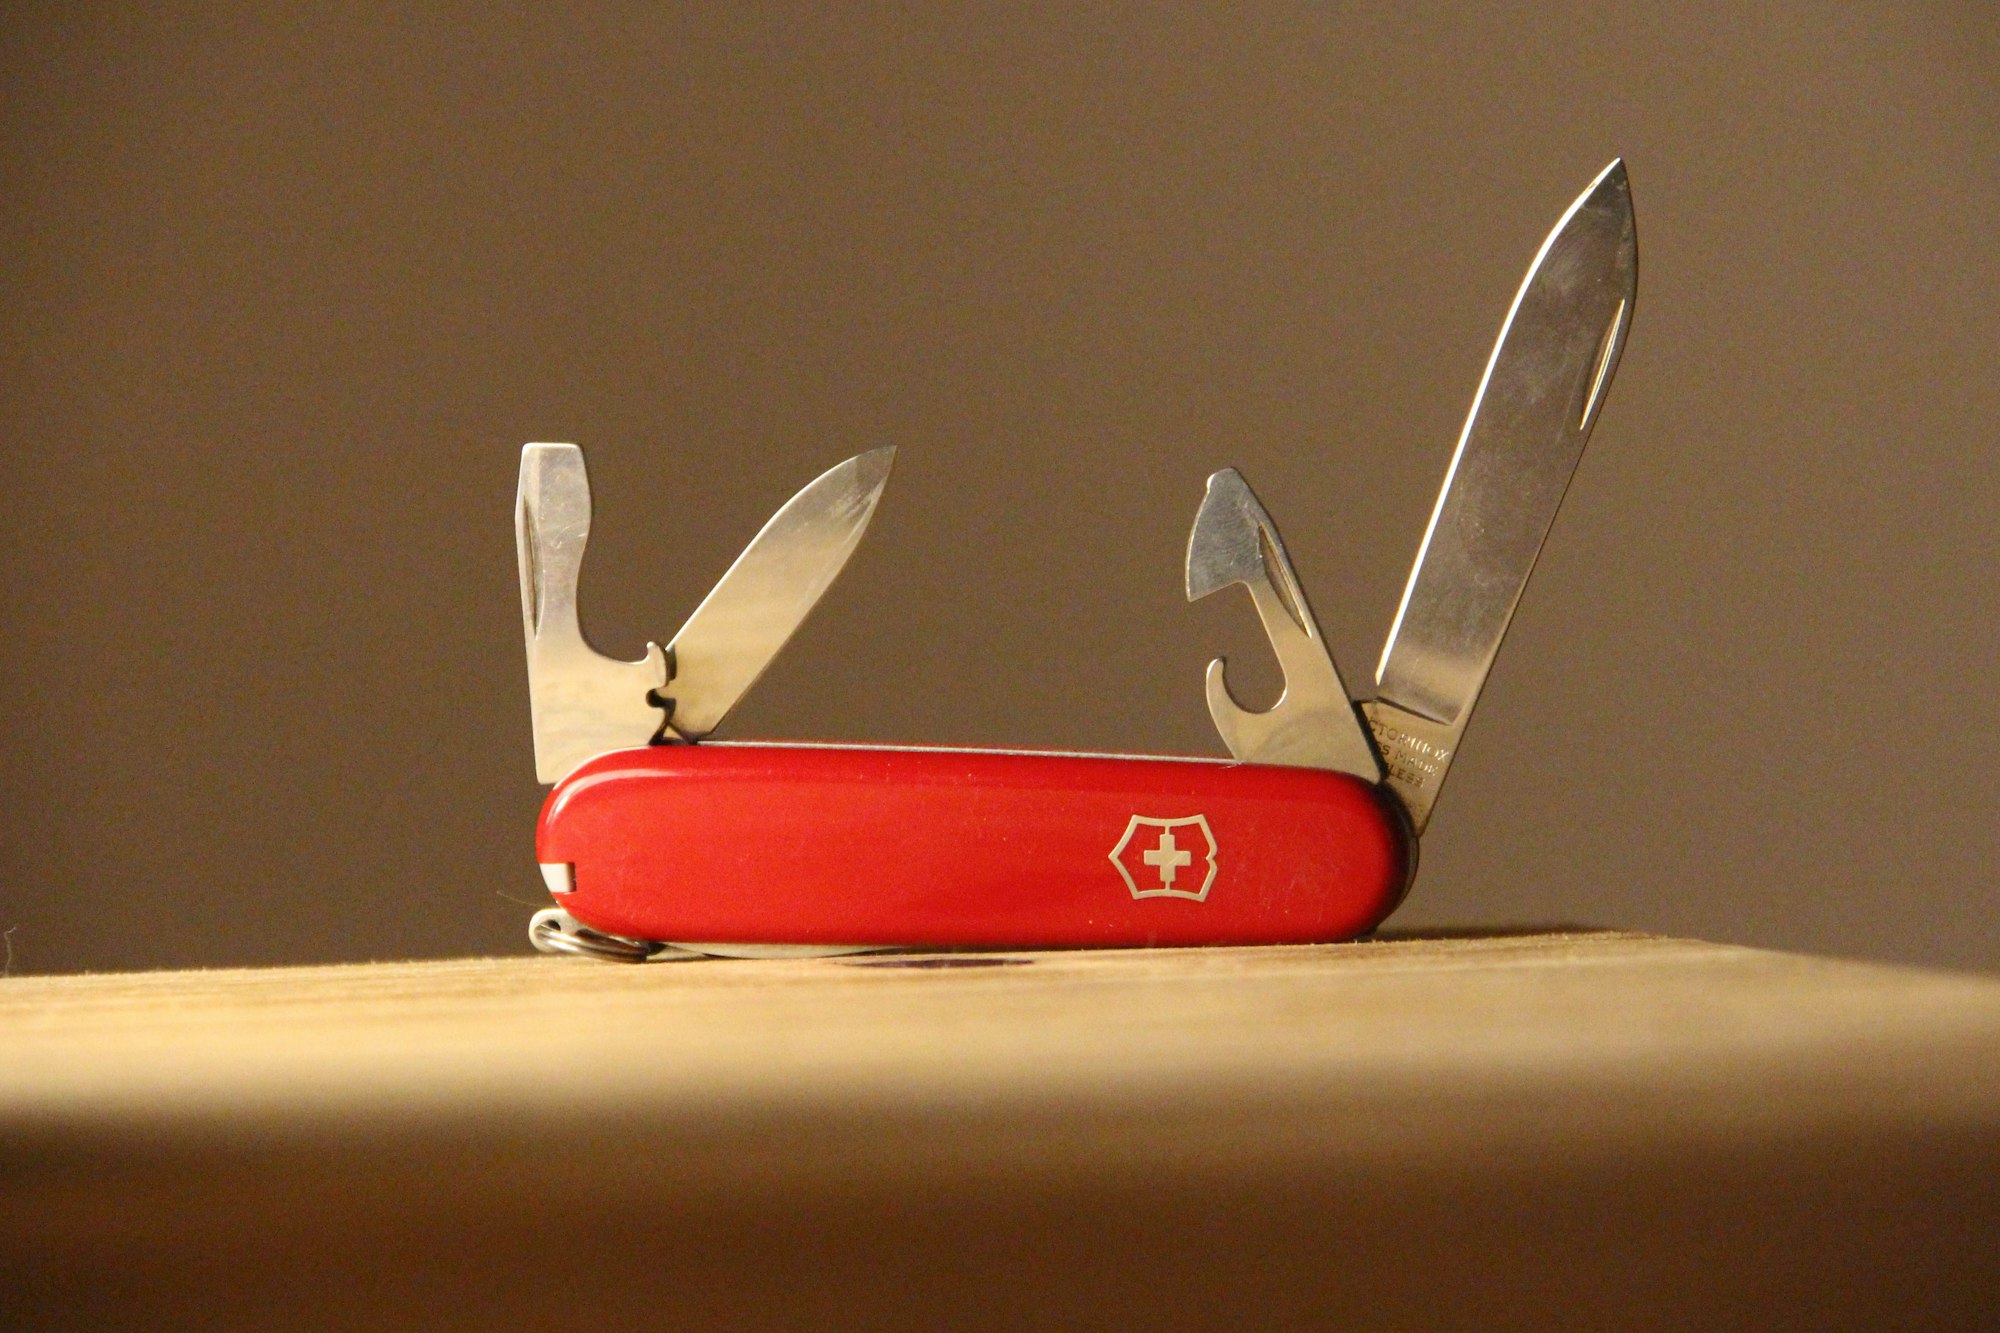 An Entrepreneur's Swiss Army Knife